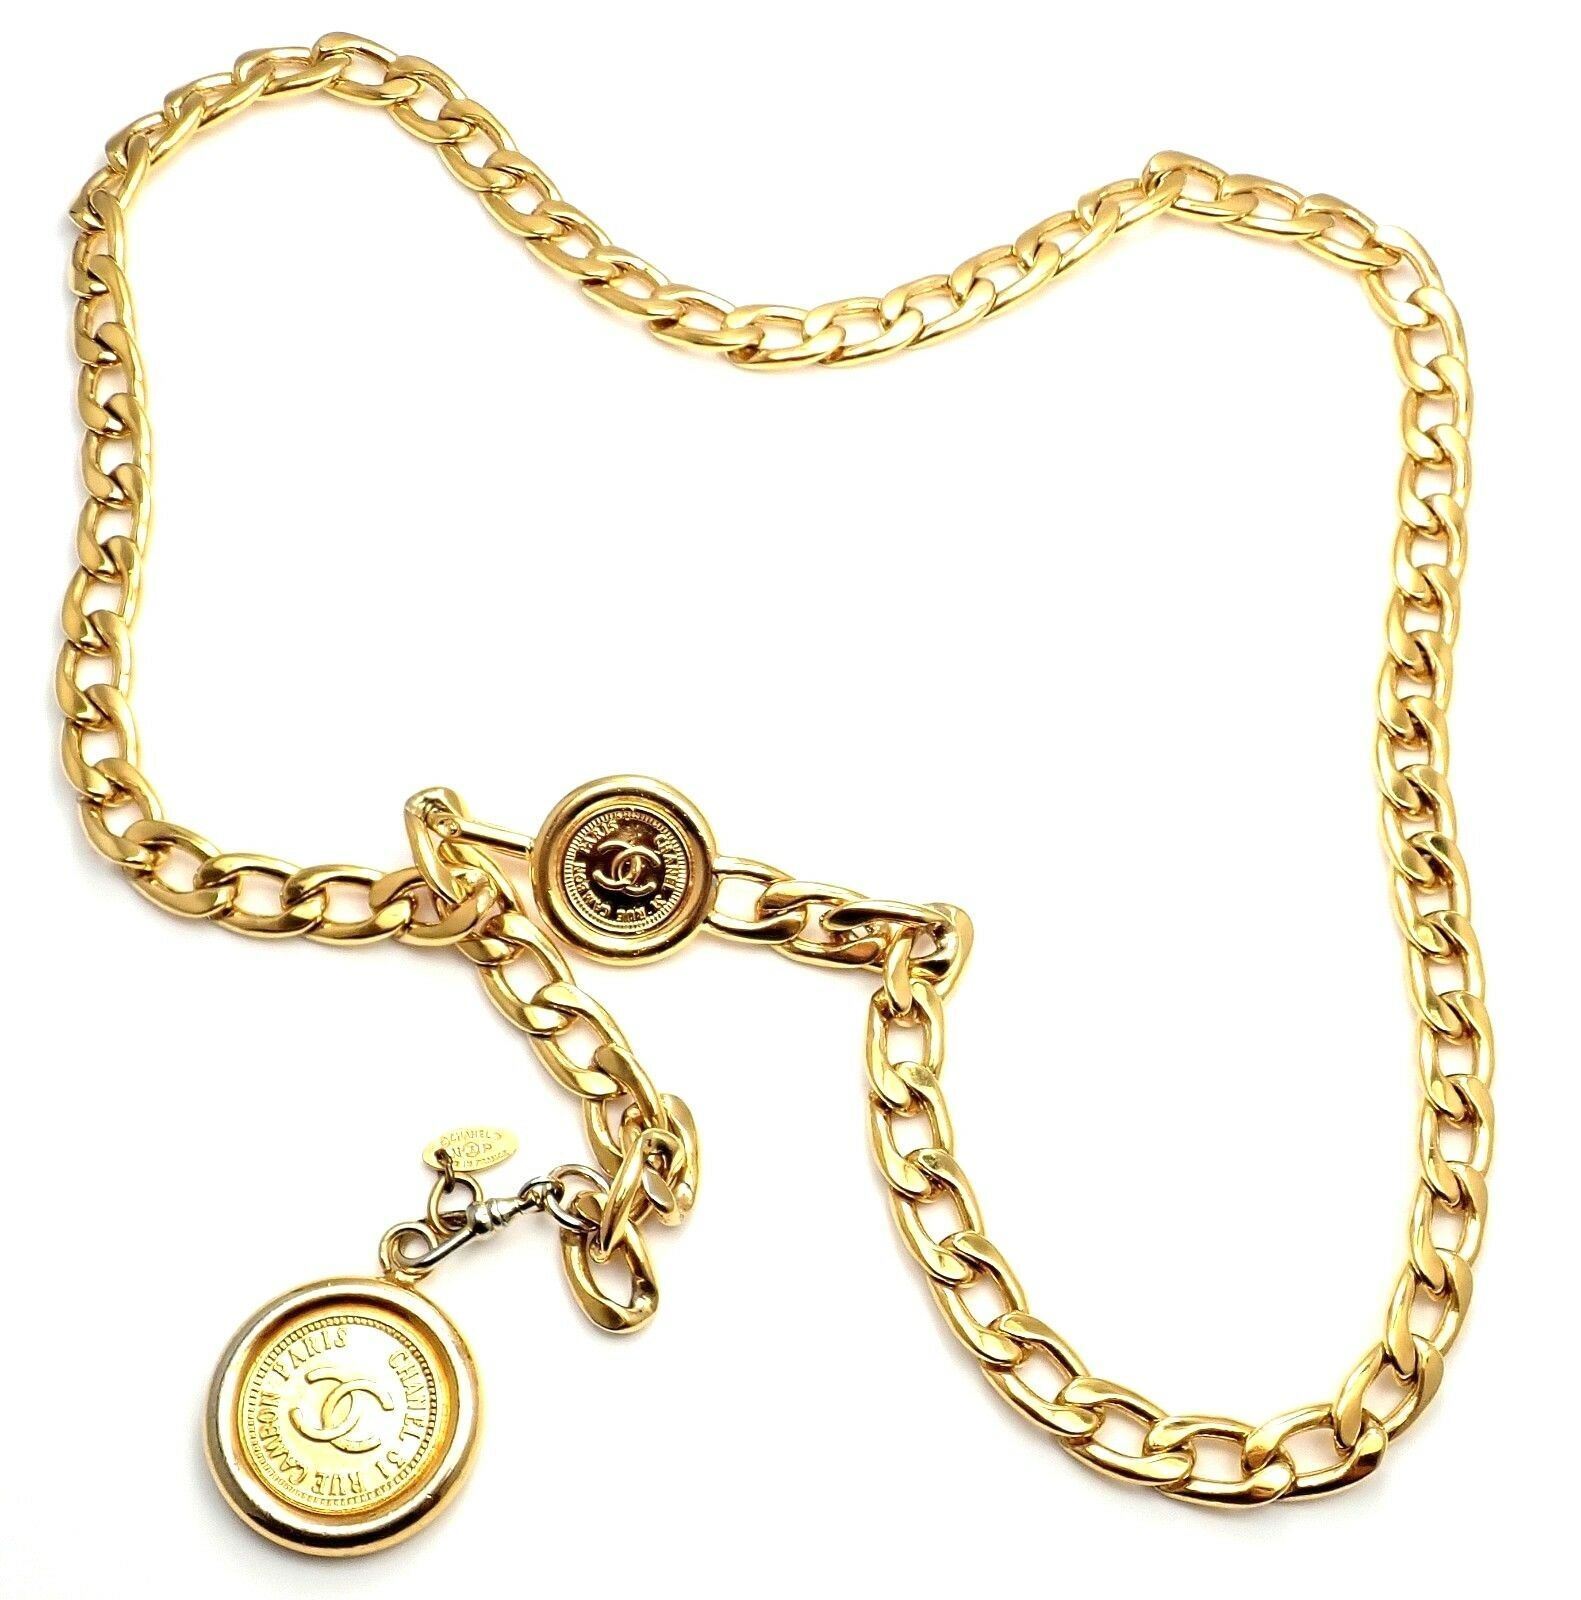 Amazing Authentic Chanel Gold Tone 3 Row Draped Clasp Belt